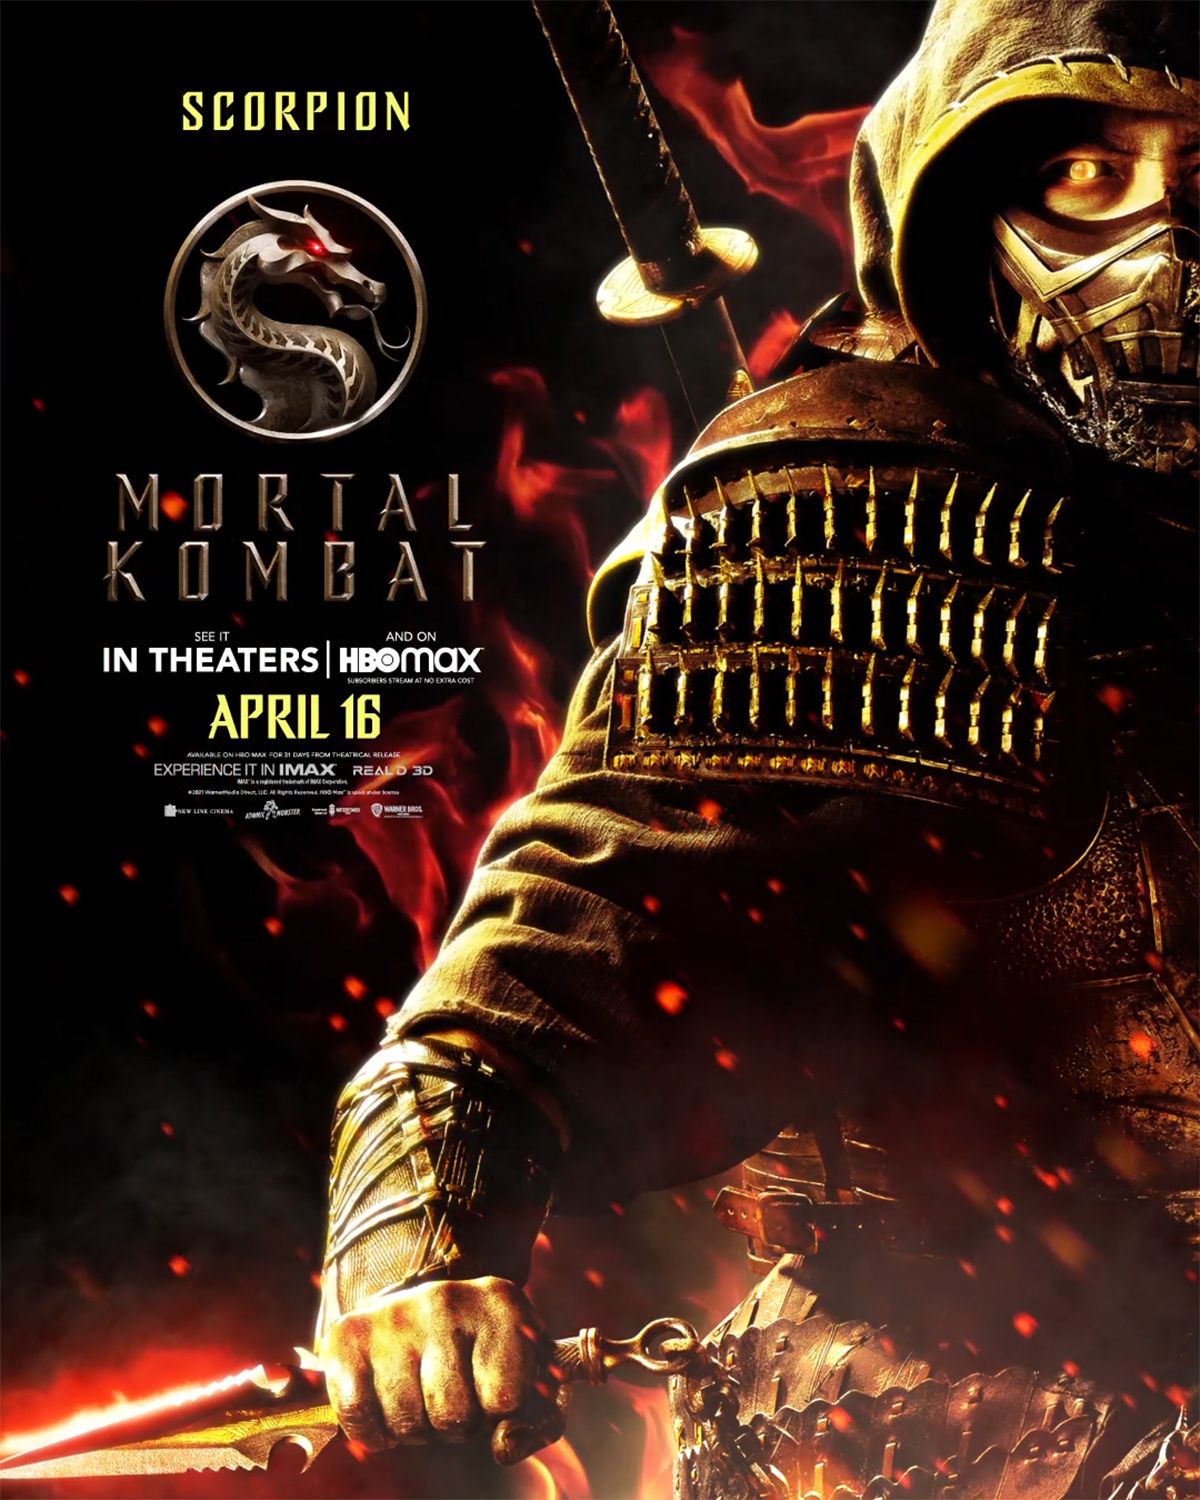 Scorpion character poster for Mortal Kombat movie